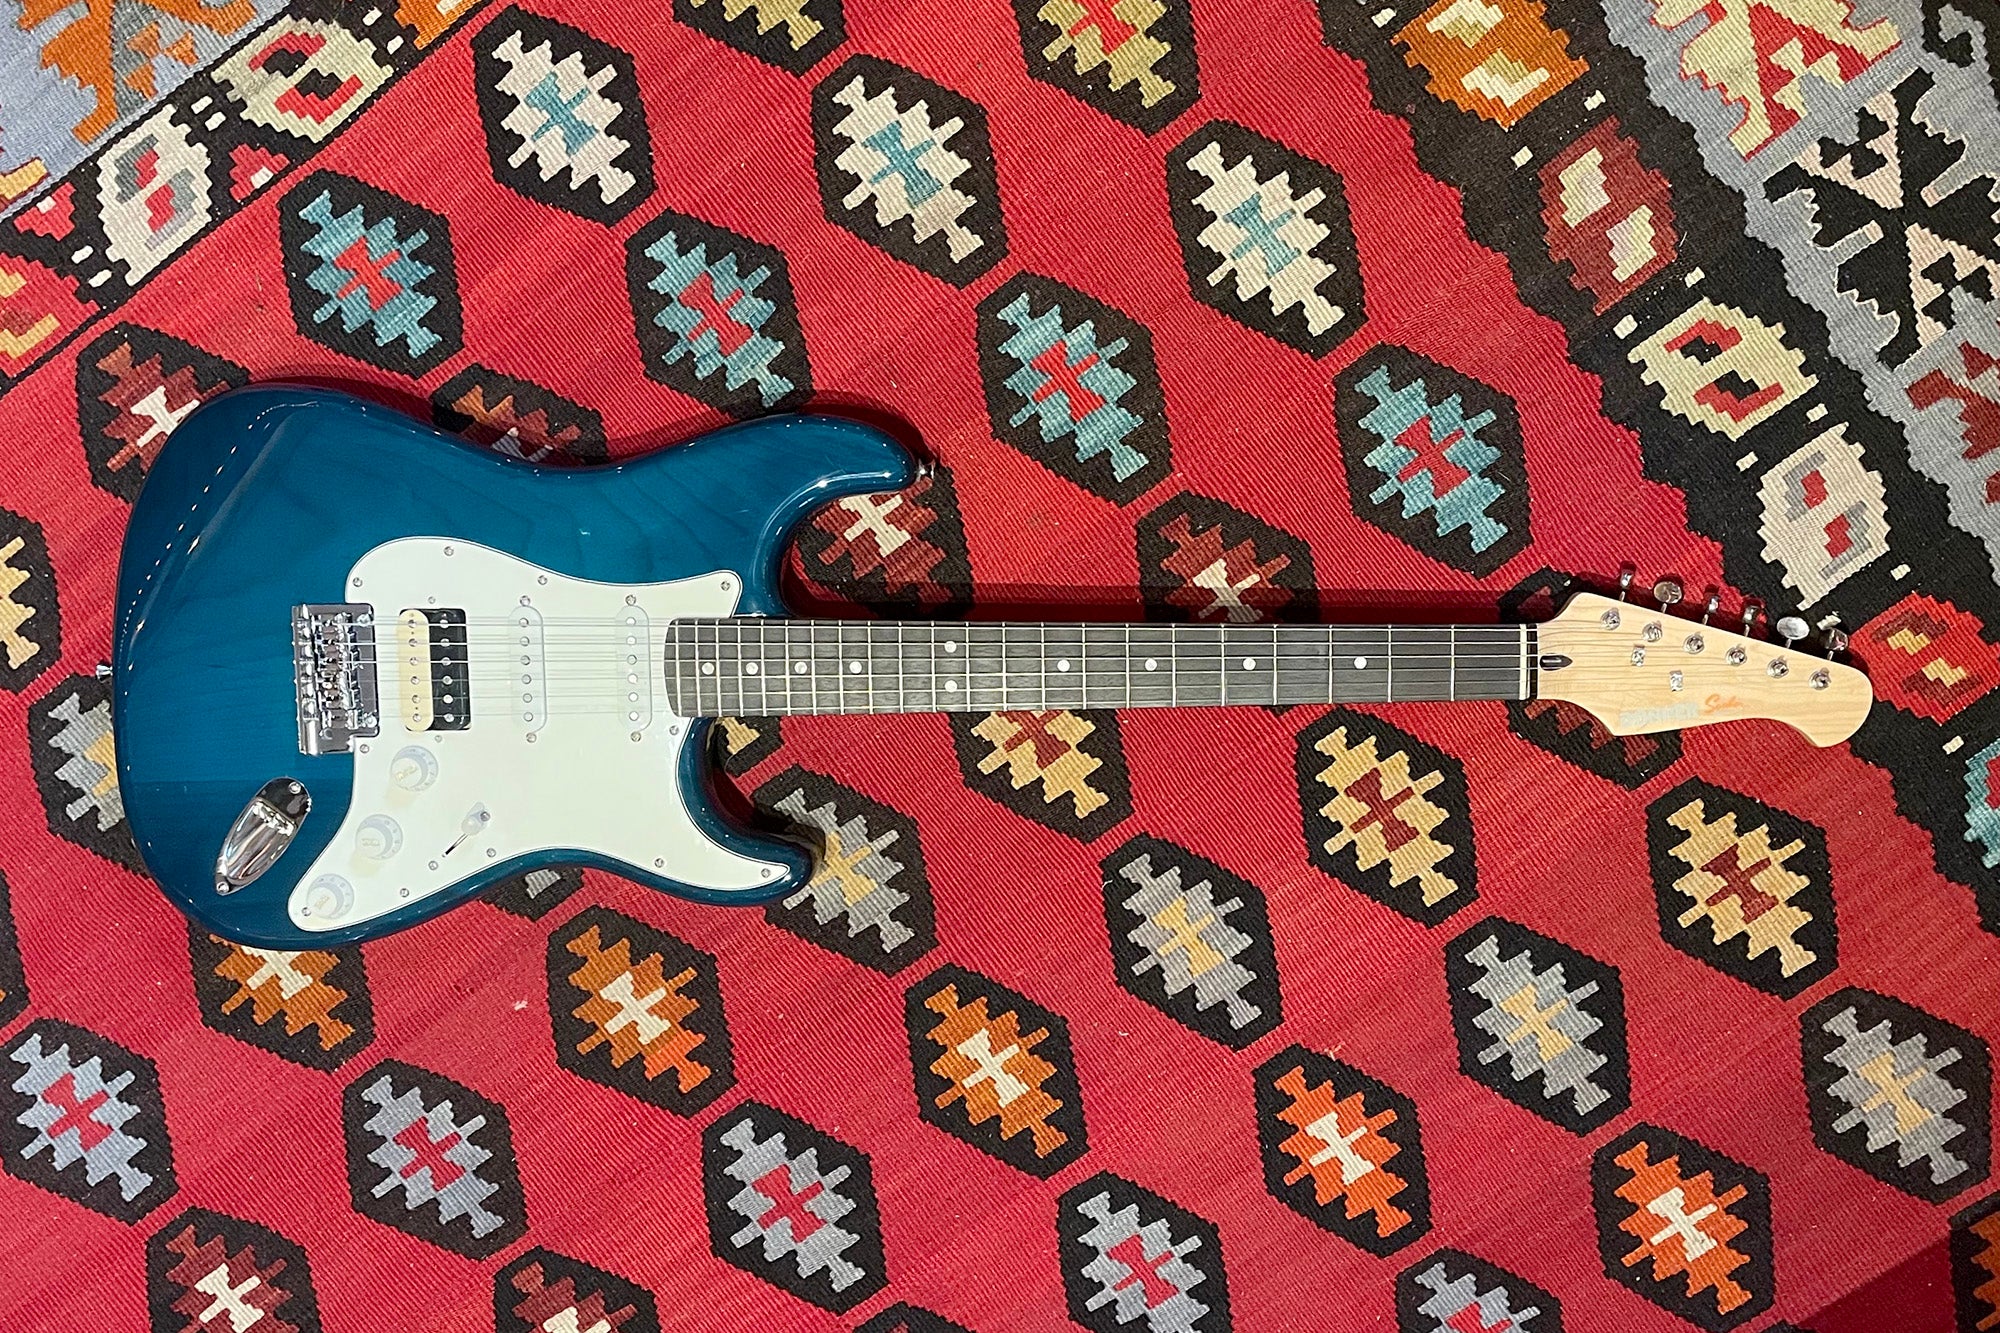 Blue Donner DST-400 budget electric guitar on a Southwestern rug